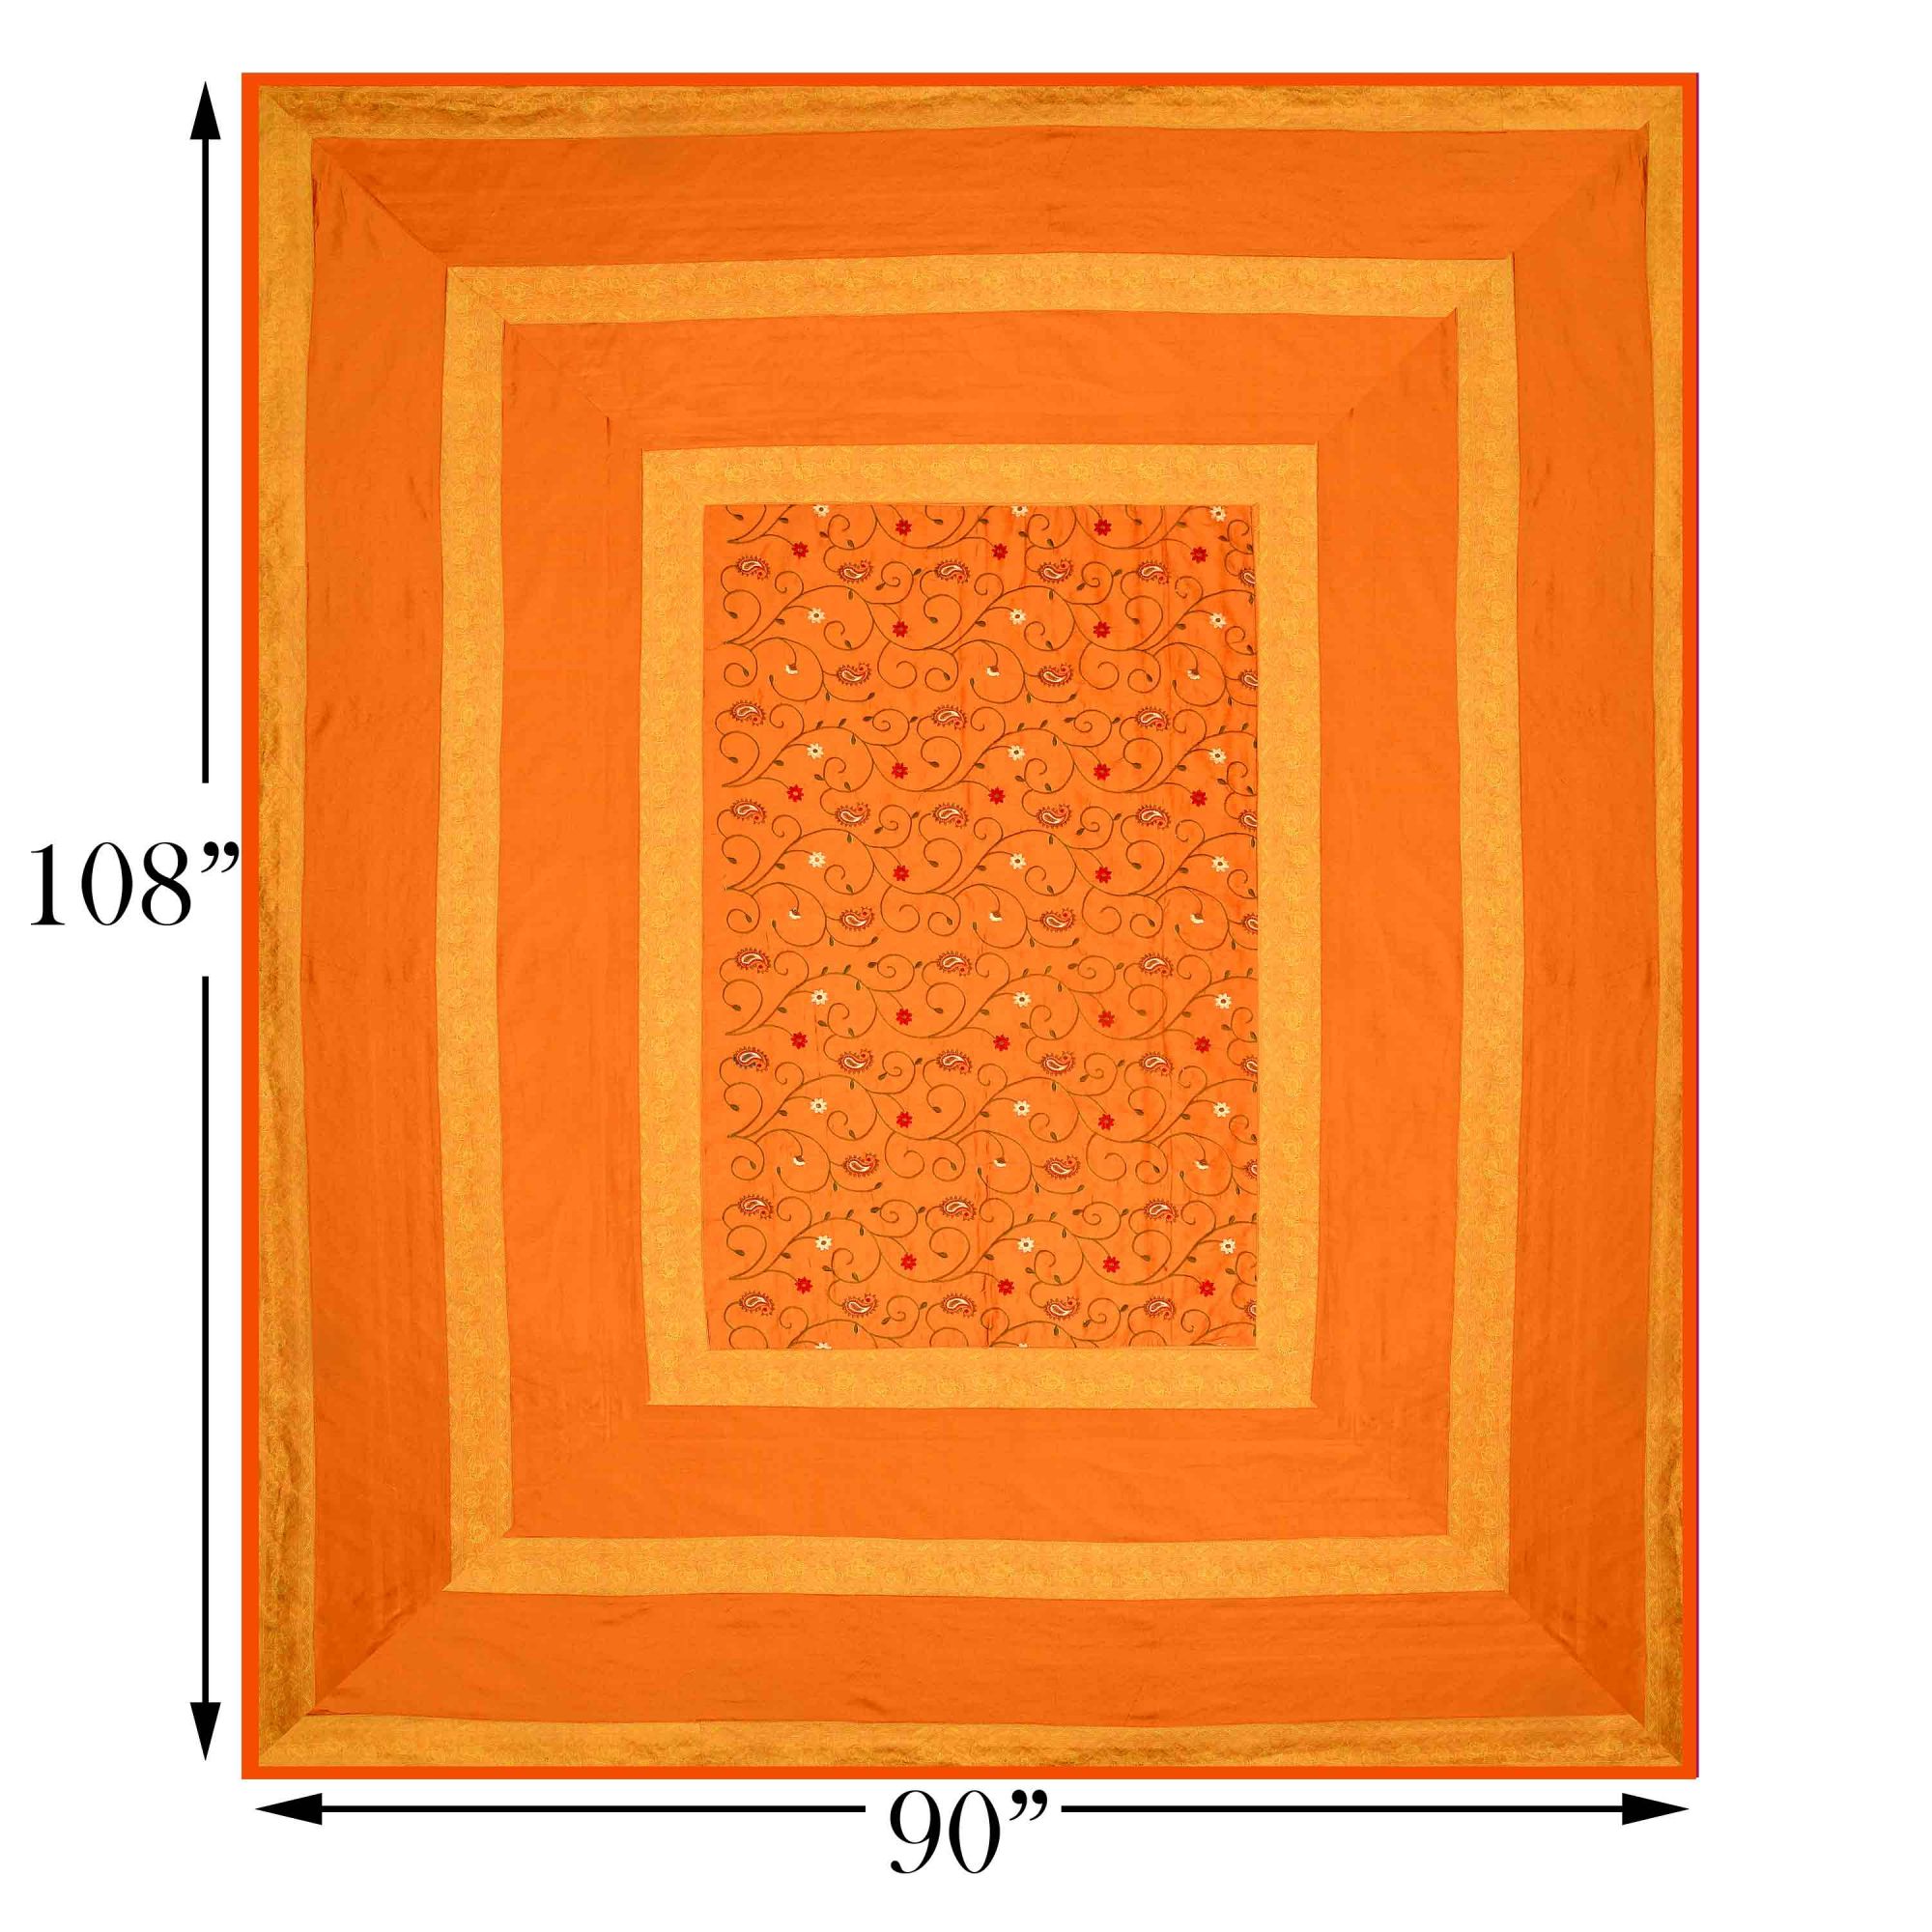 Orangish Yellow  Base With Zari  Border Silk Computer Embroidery  And Silk  Double Bedsheet